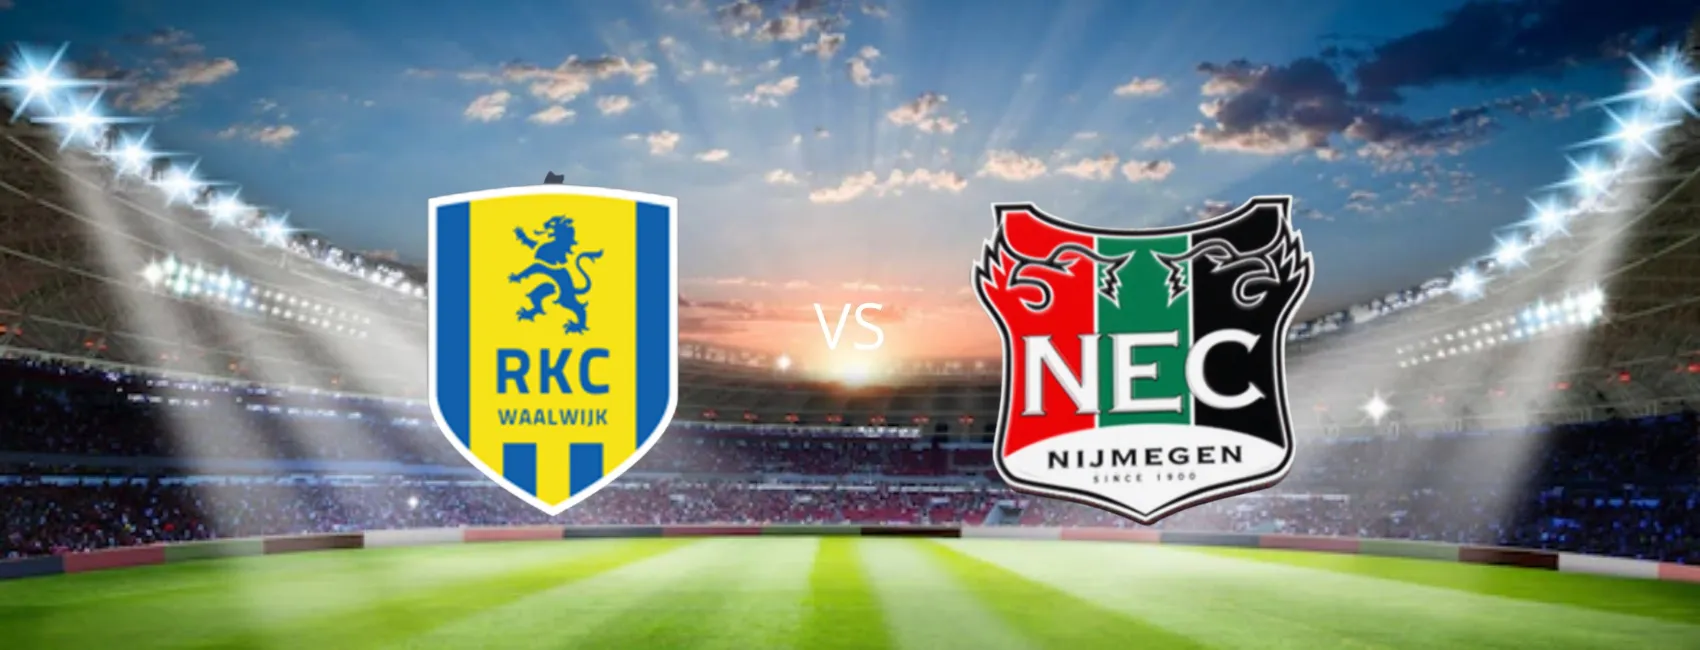 RKC Waalwijk vs NEC Nijmegen